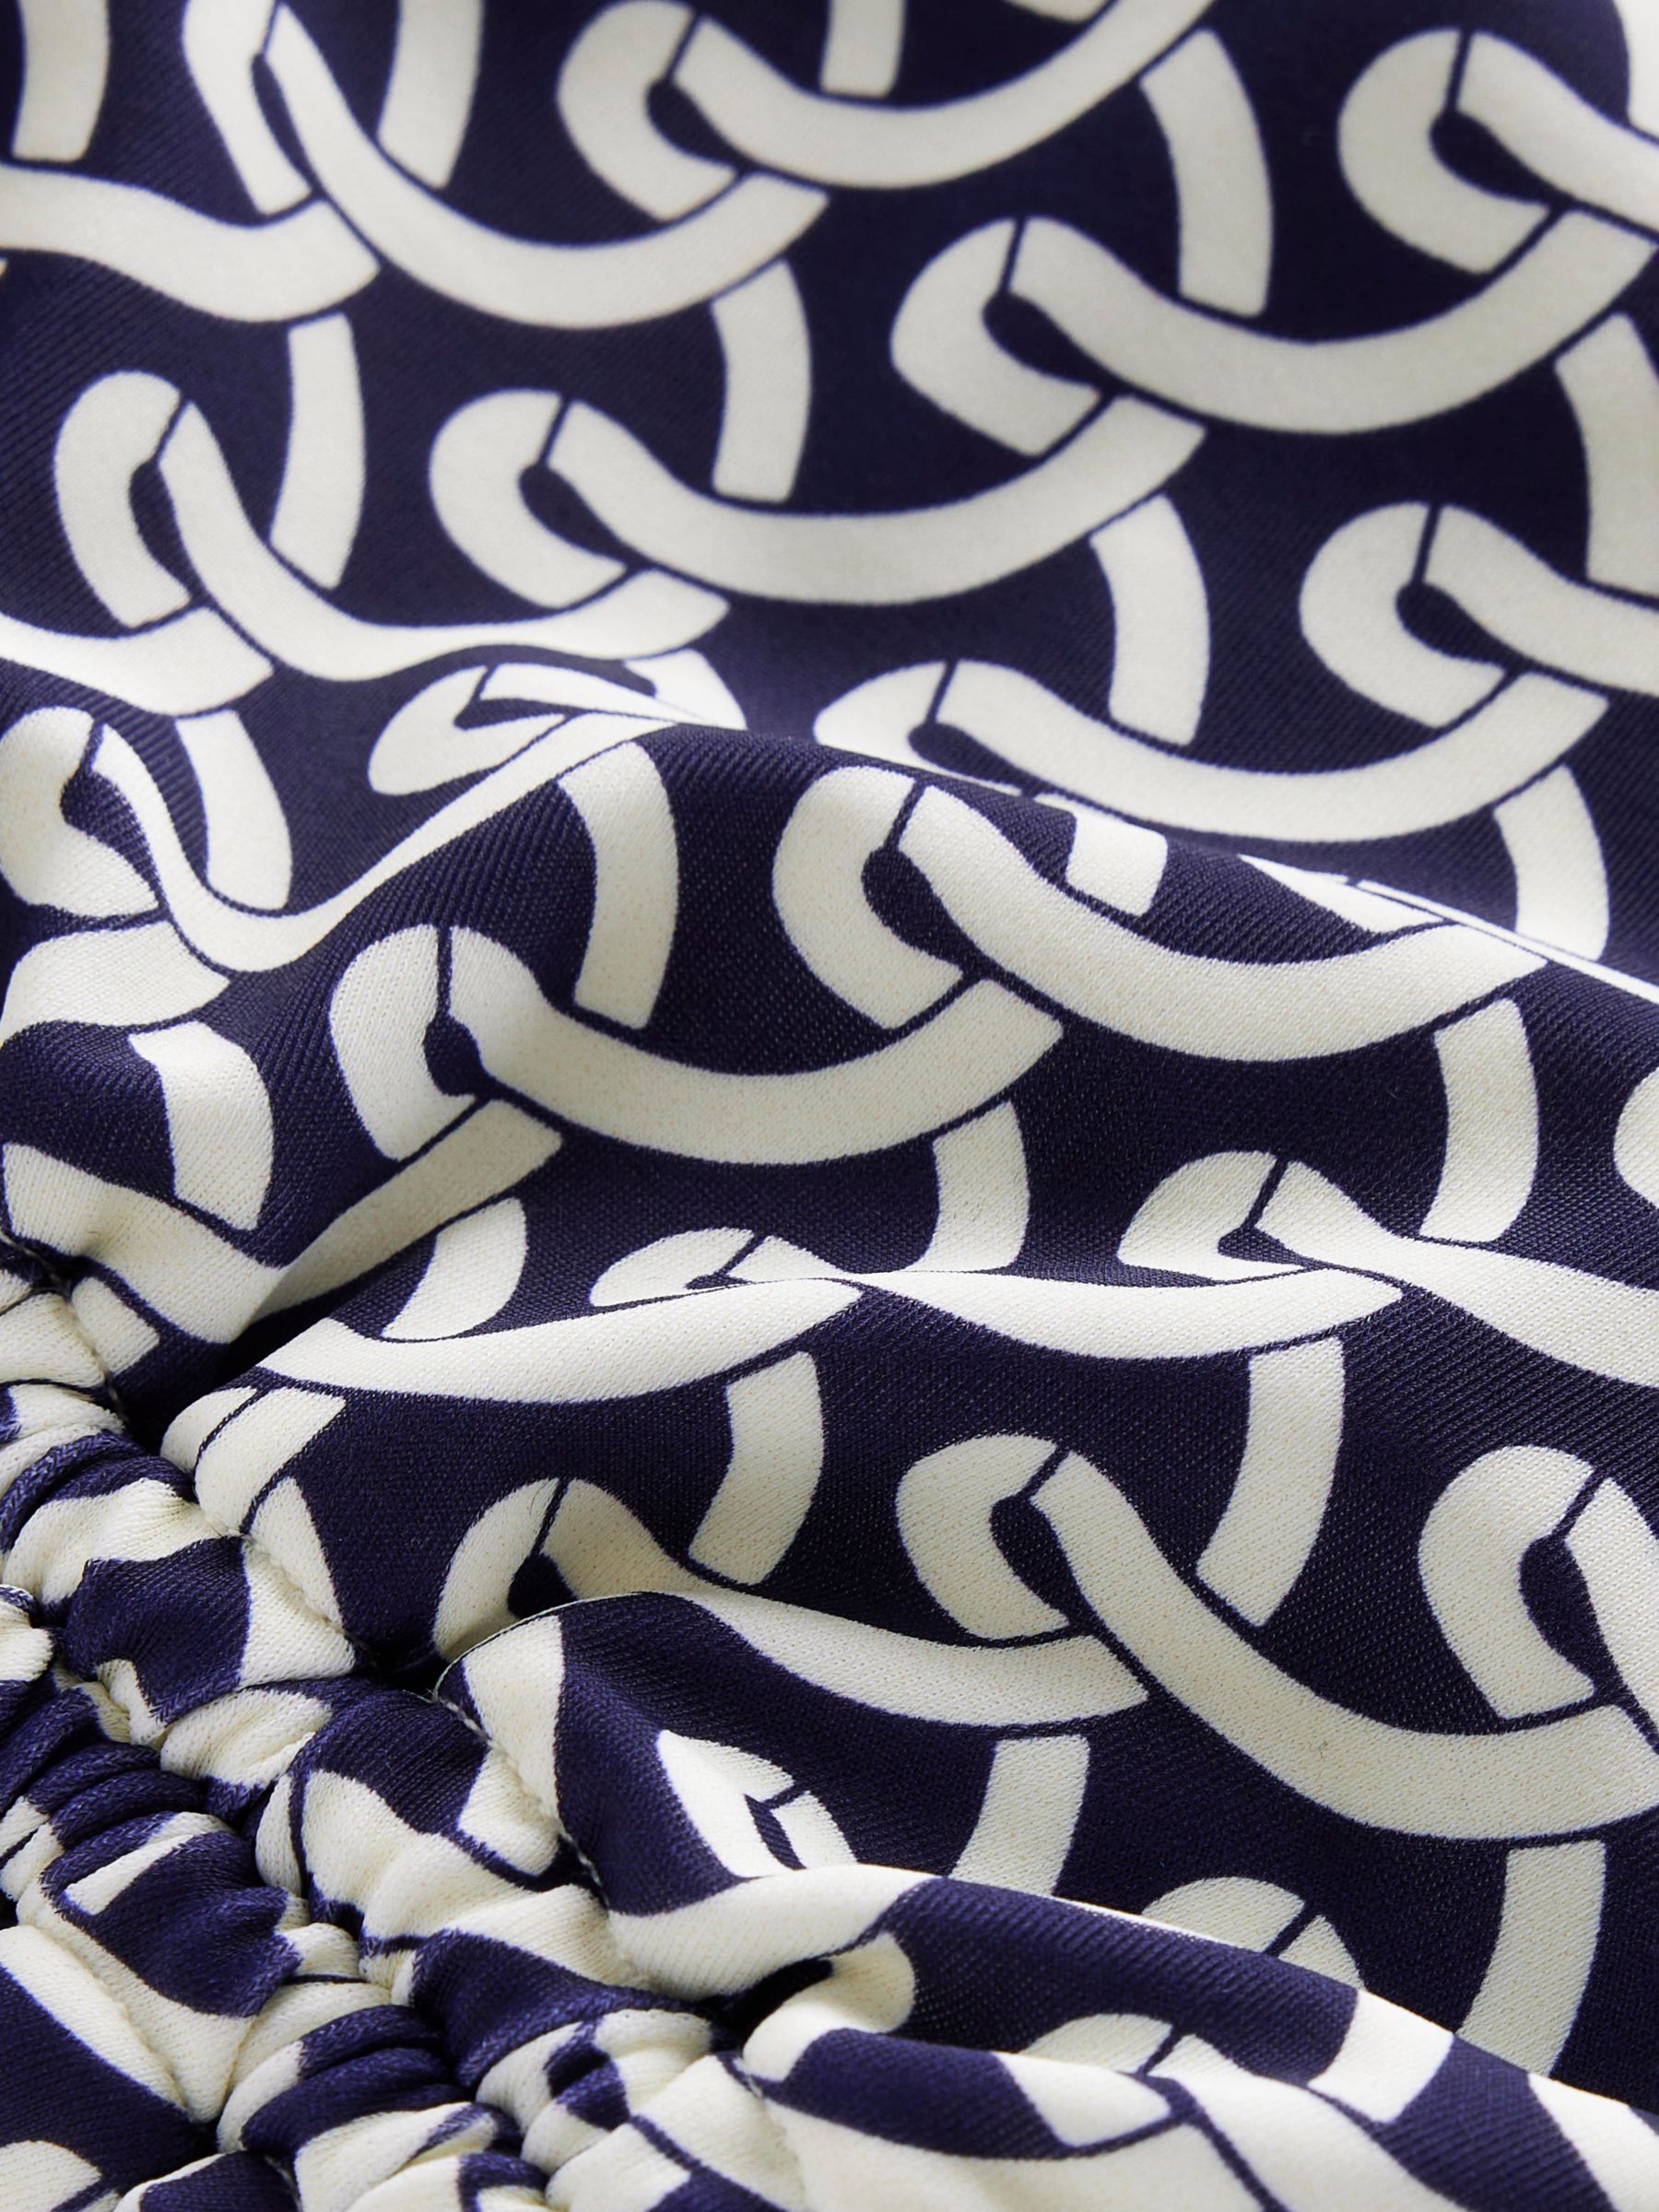 Boden Geometric Print Swimsuit, Navy/White, 8